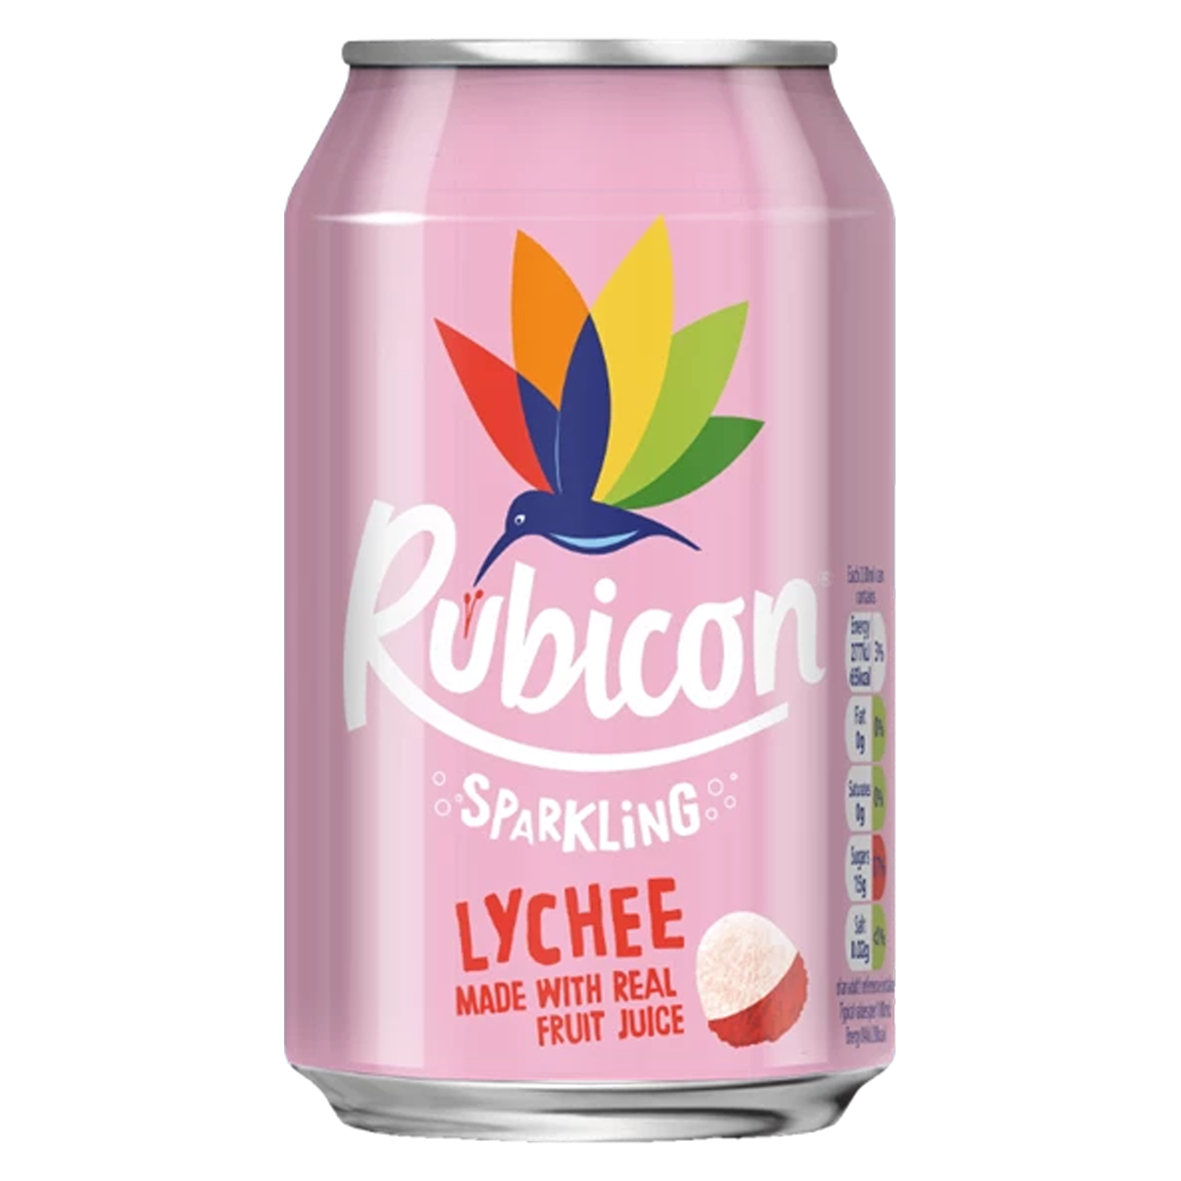 Rubicon sparkling lychee (330ml) SaveCo Online Ltd